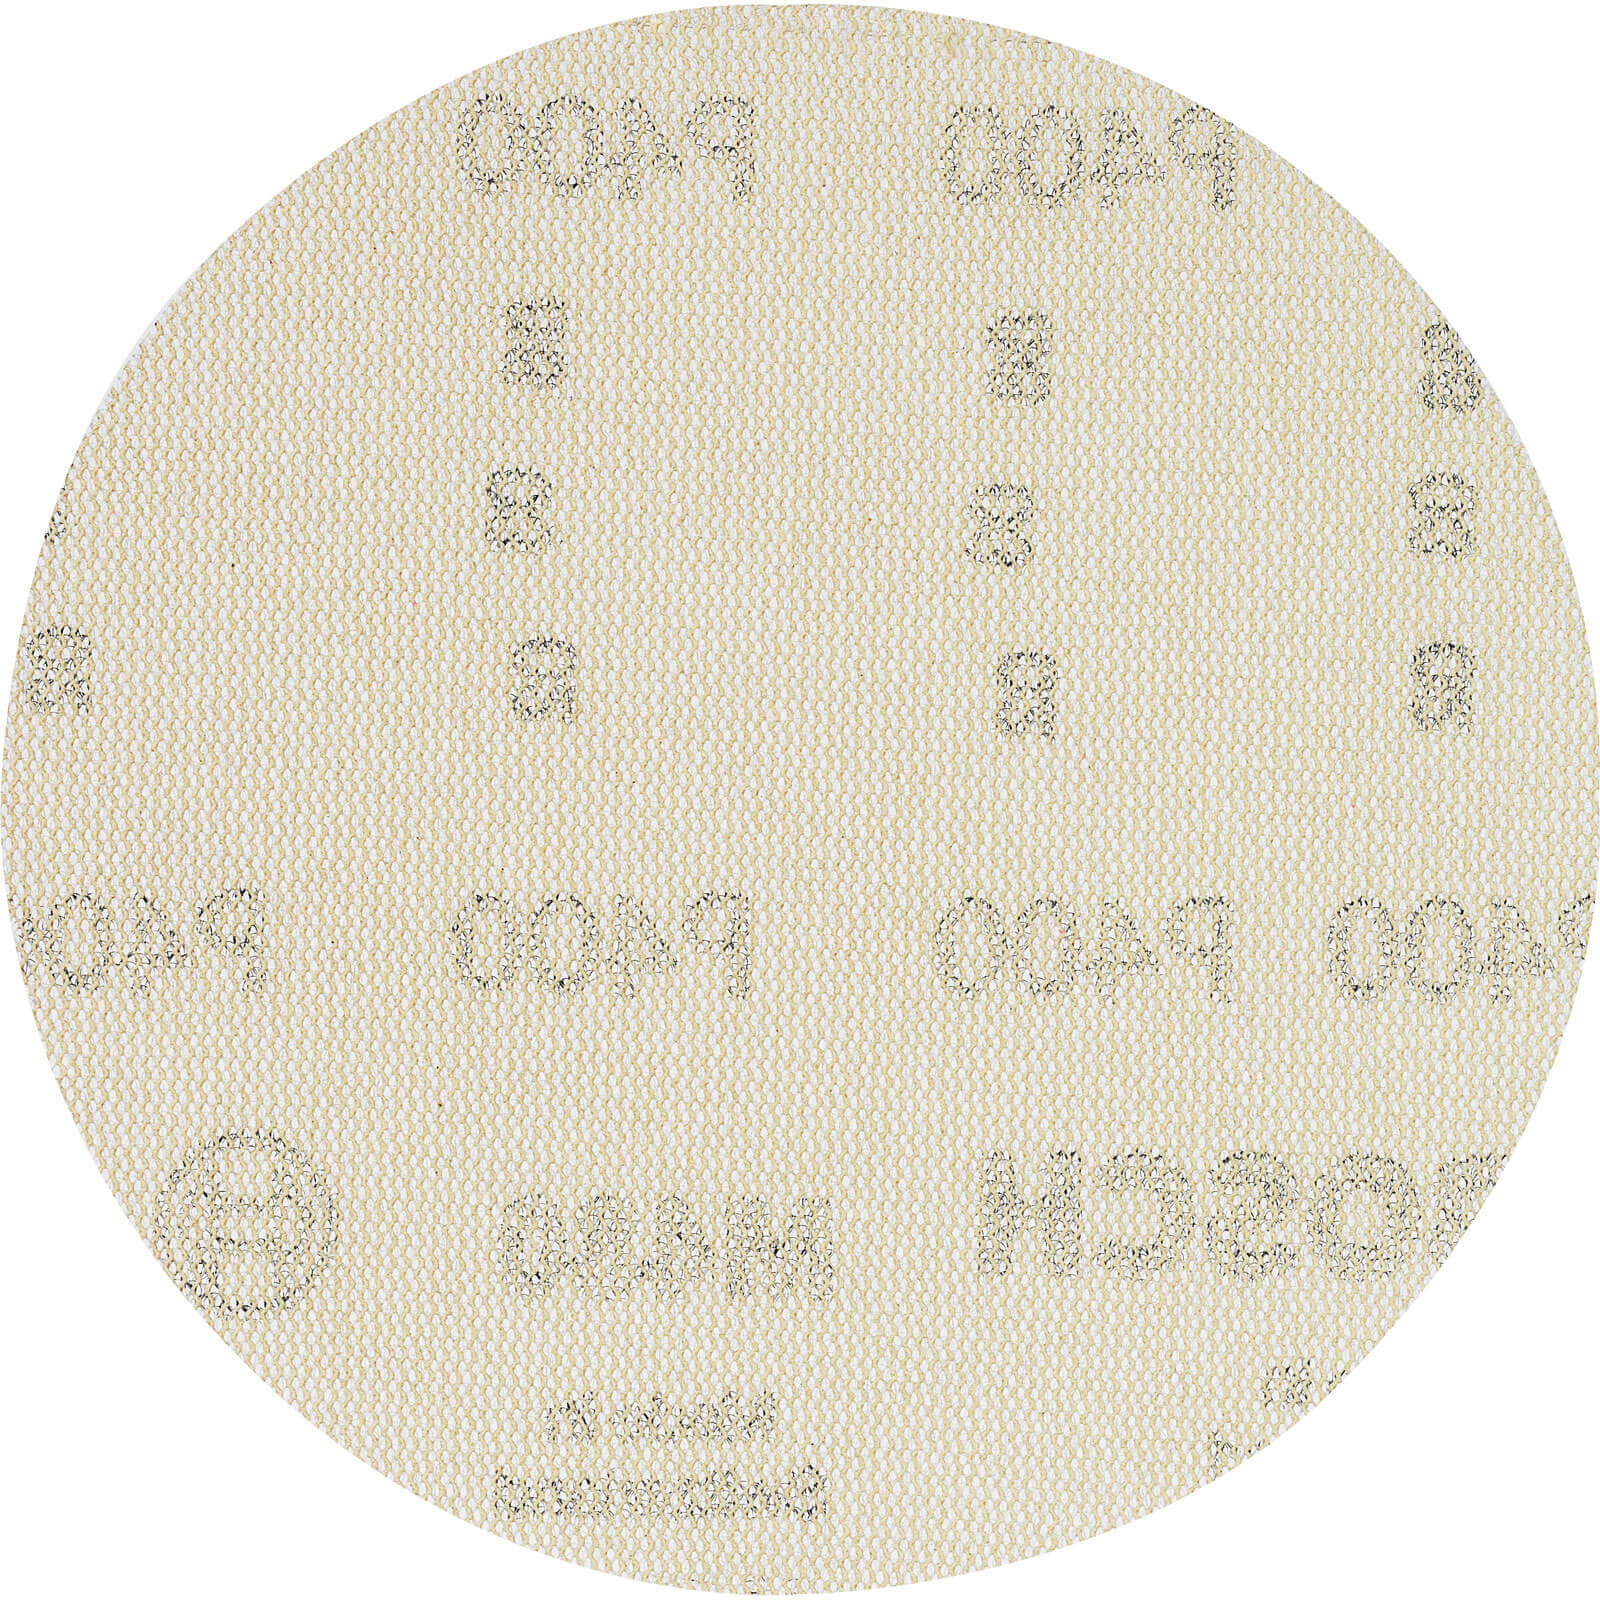 Photo of Bosch M480 115mm Net Abrasive Sanding Disc 115mm 400g Pack Of 5